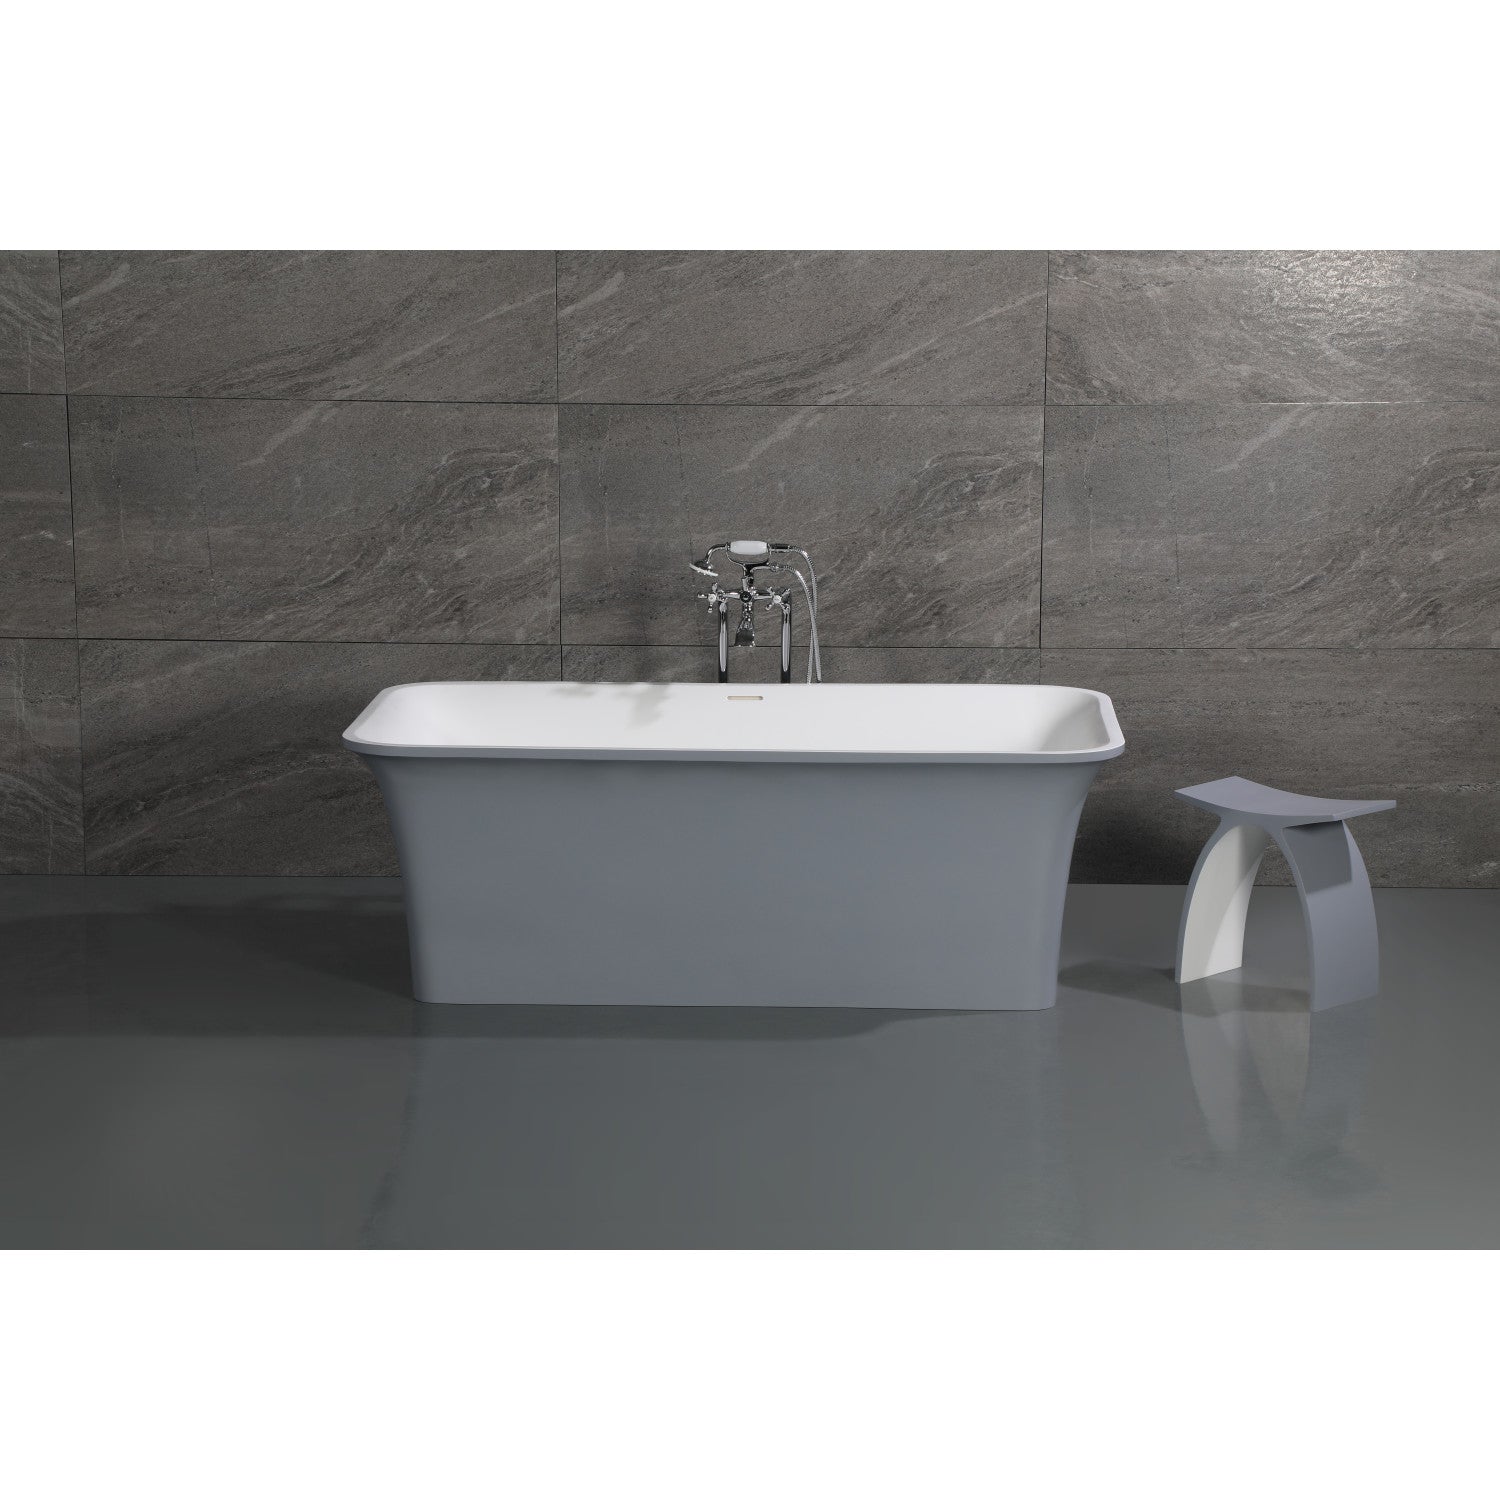 Kingston Brass Aqua Eden Arcticstone 67-Inch Solid Surface White Stone Freestanding Tub with Drain in Matte White/Gray